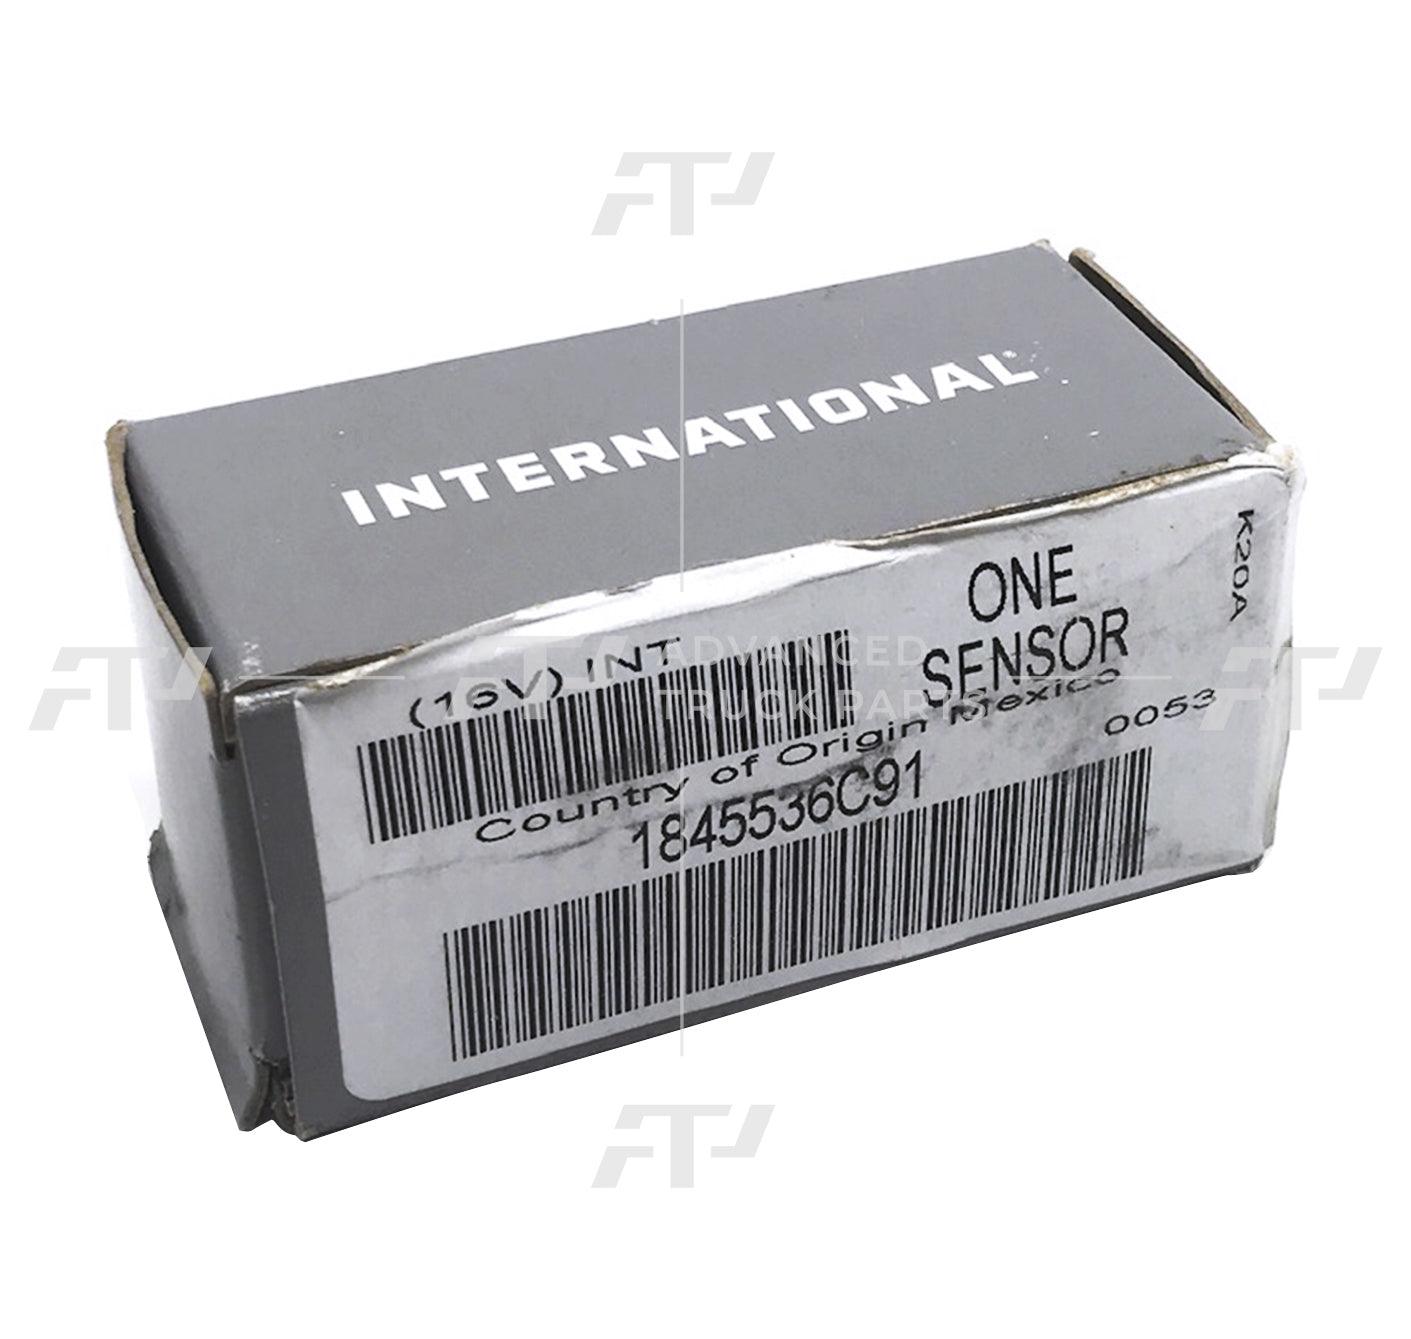 1845536C91 Genuine International® Icp Sensor For Navistar Dt466 - ADVANCED TRUCK PARTS